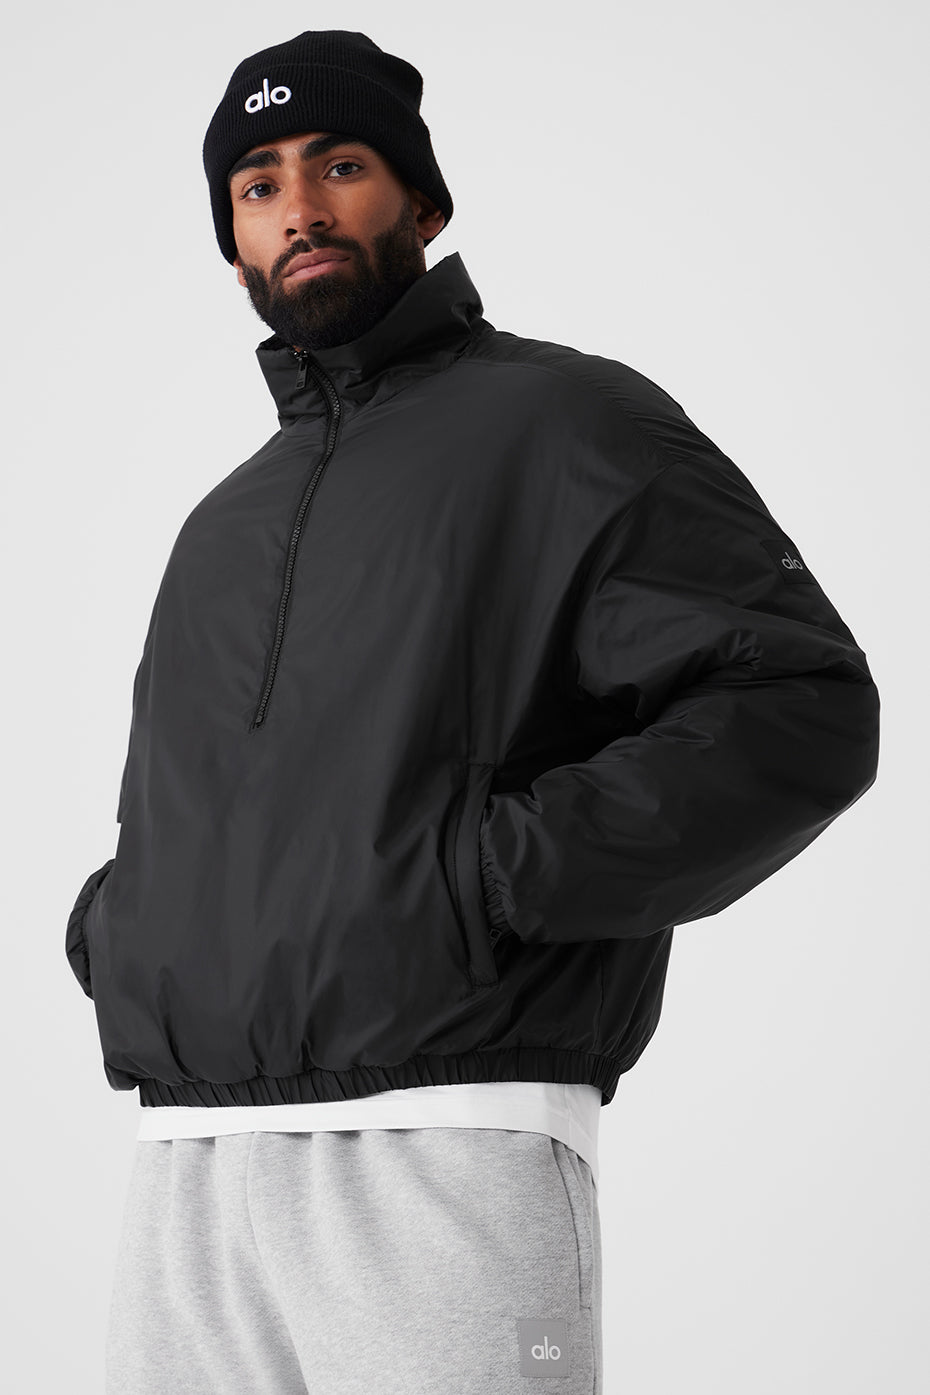 Latitude Light Weight 1/2 Zip Pullover Jacket - Black